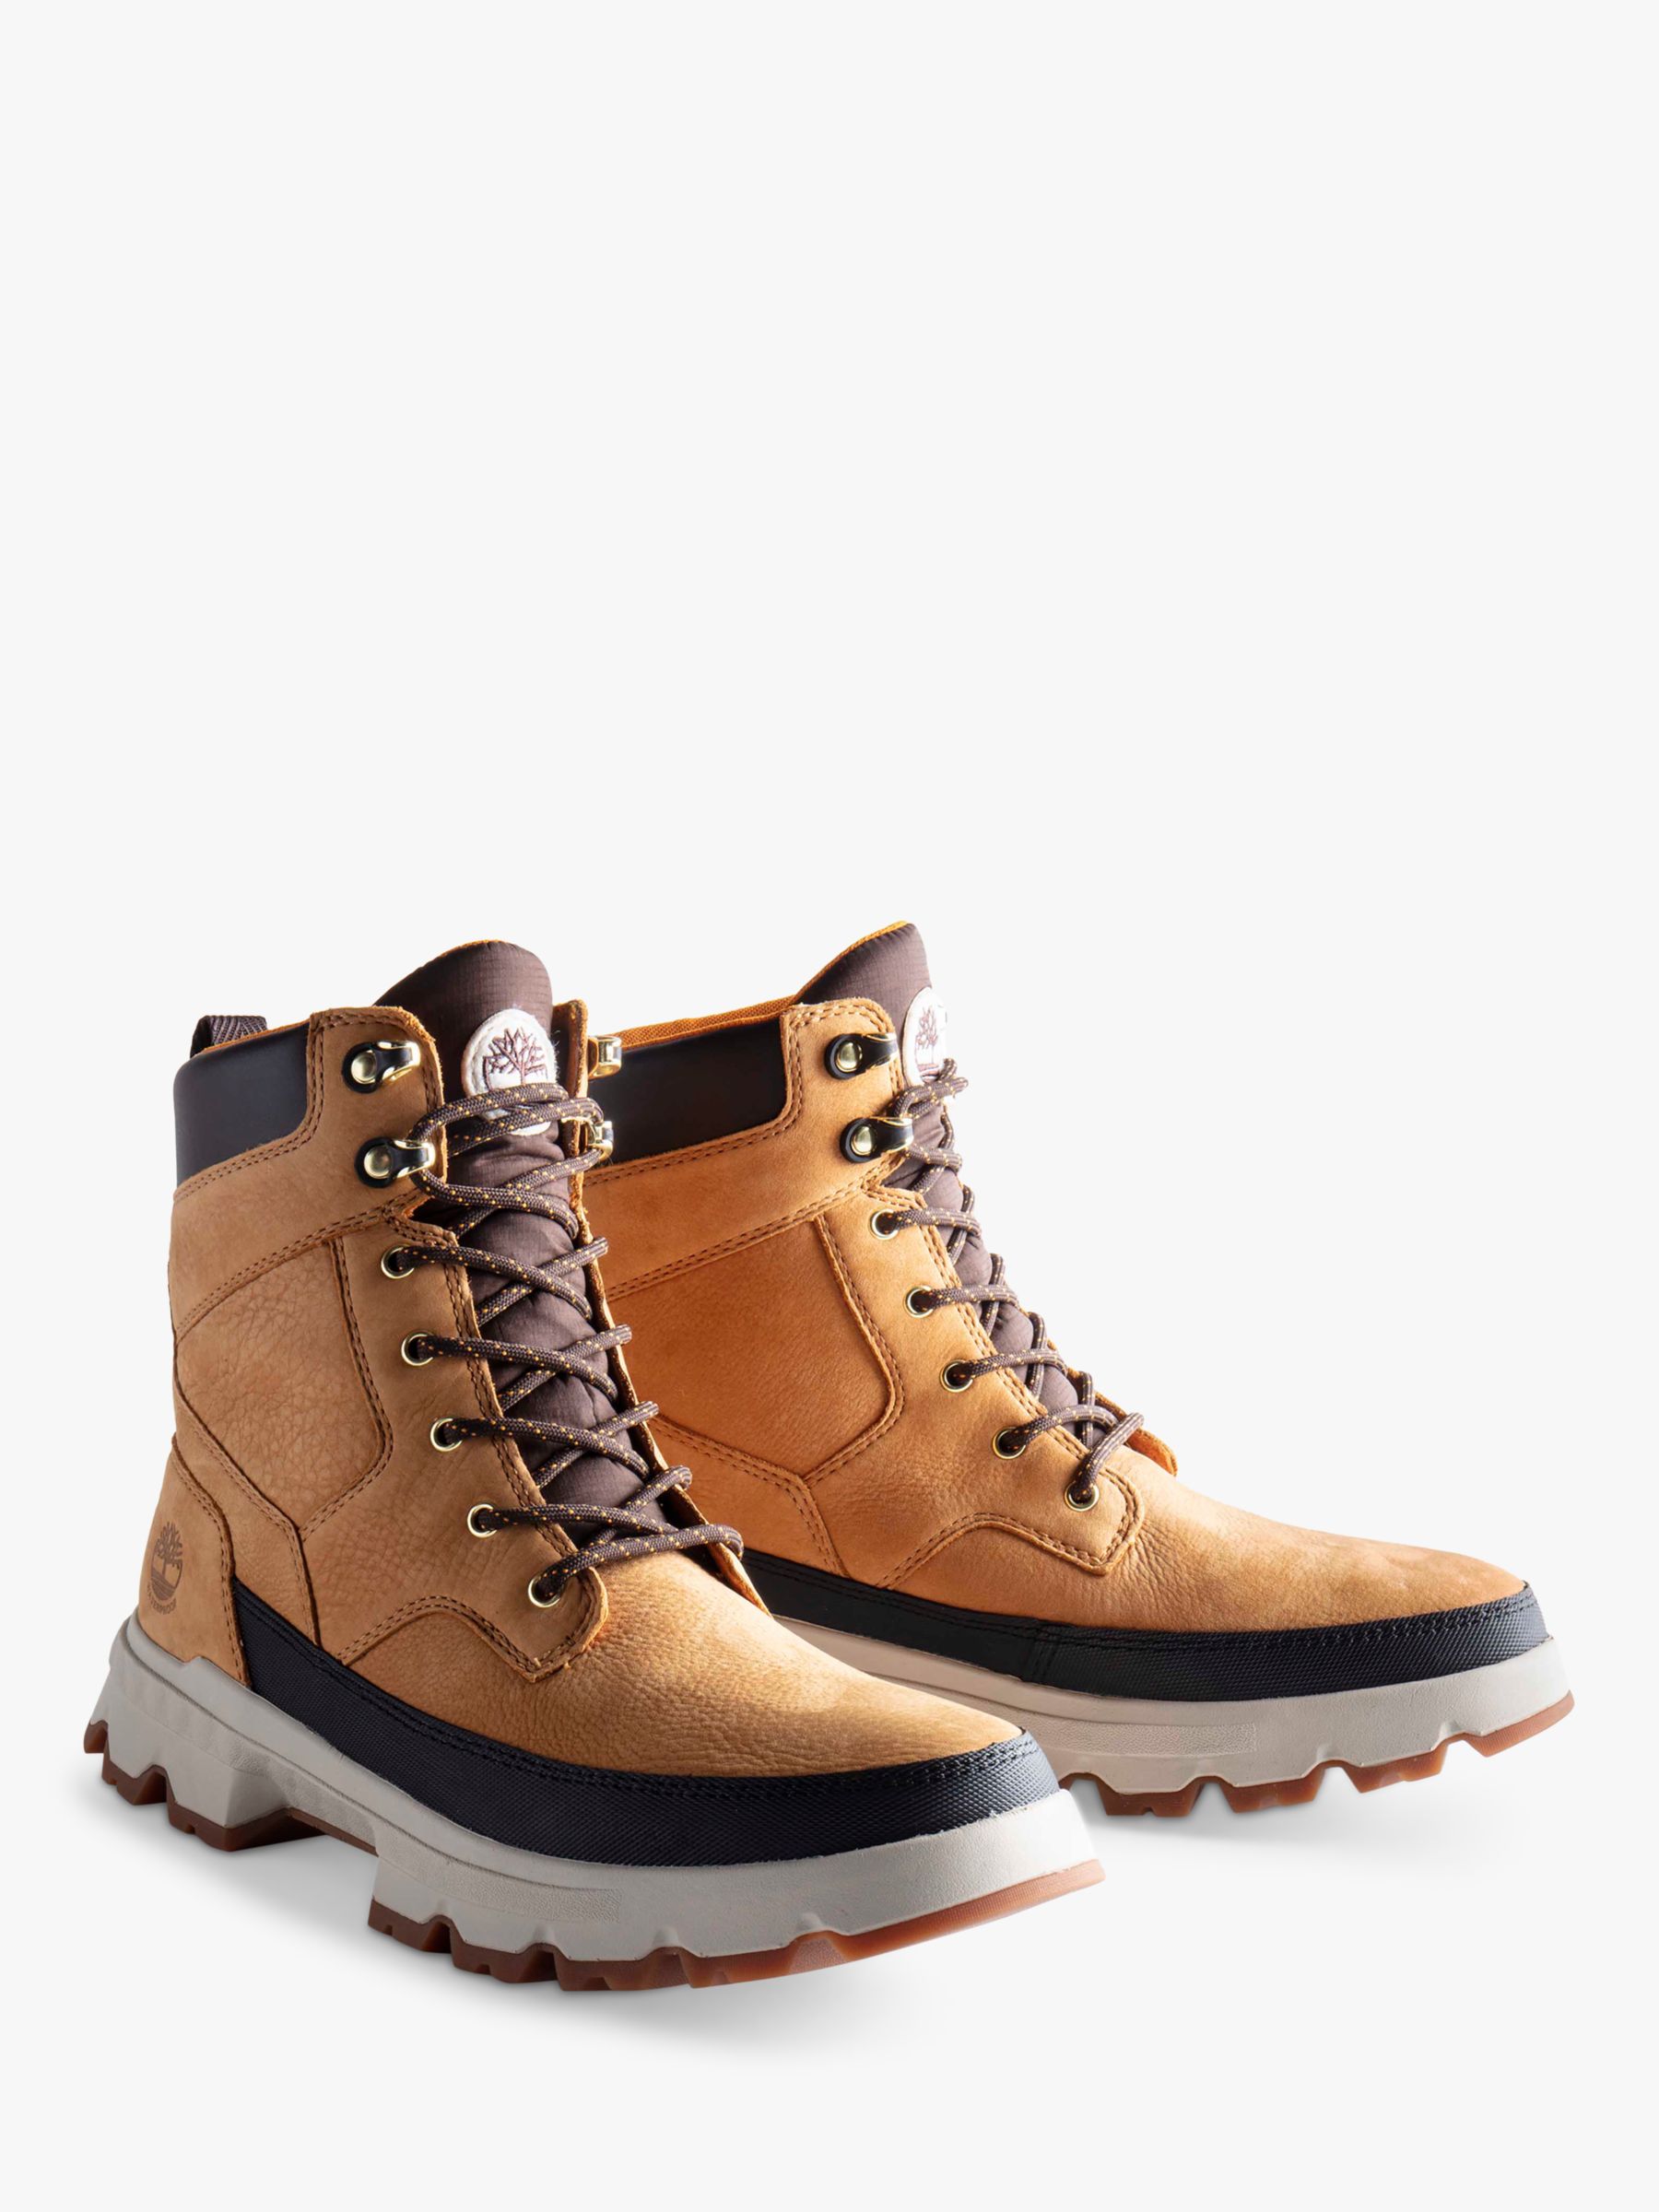 Timberland Ultra Waterproof Leather Chukka Boots, Wheat John Lewis & Partners